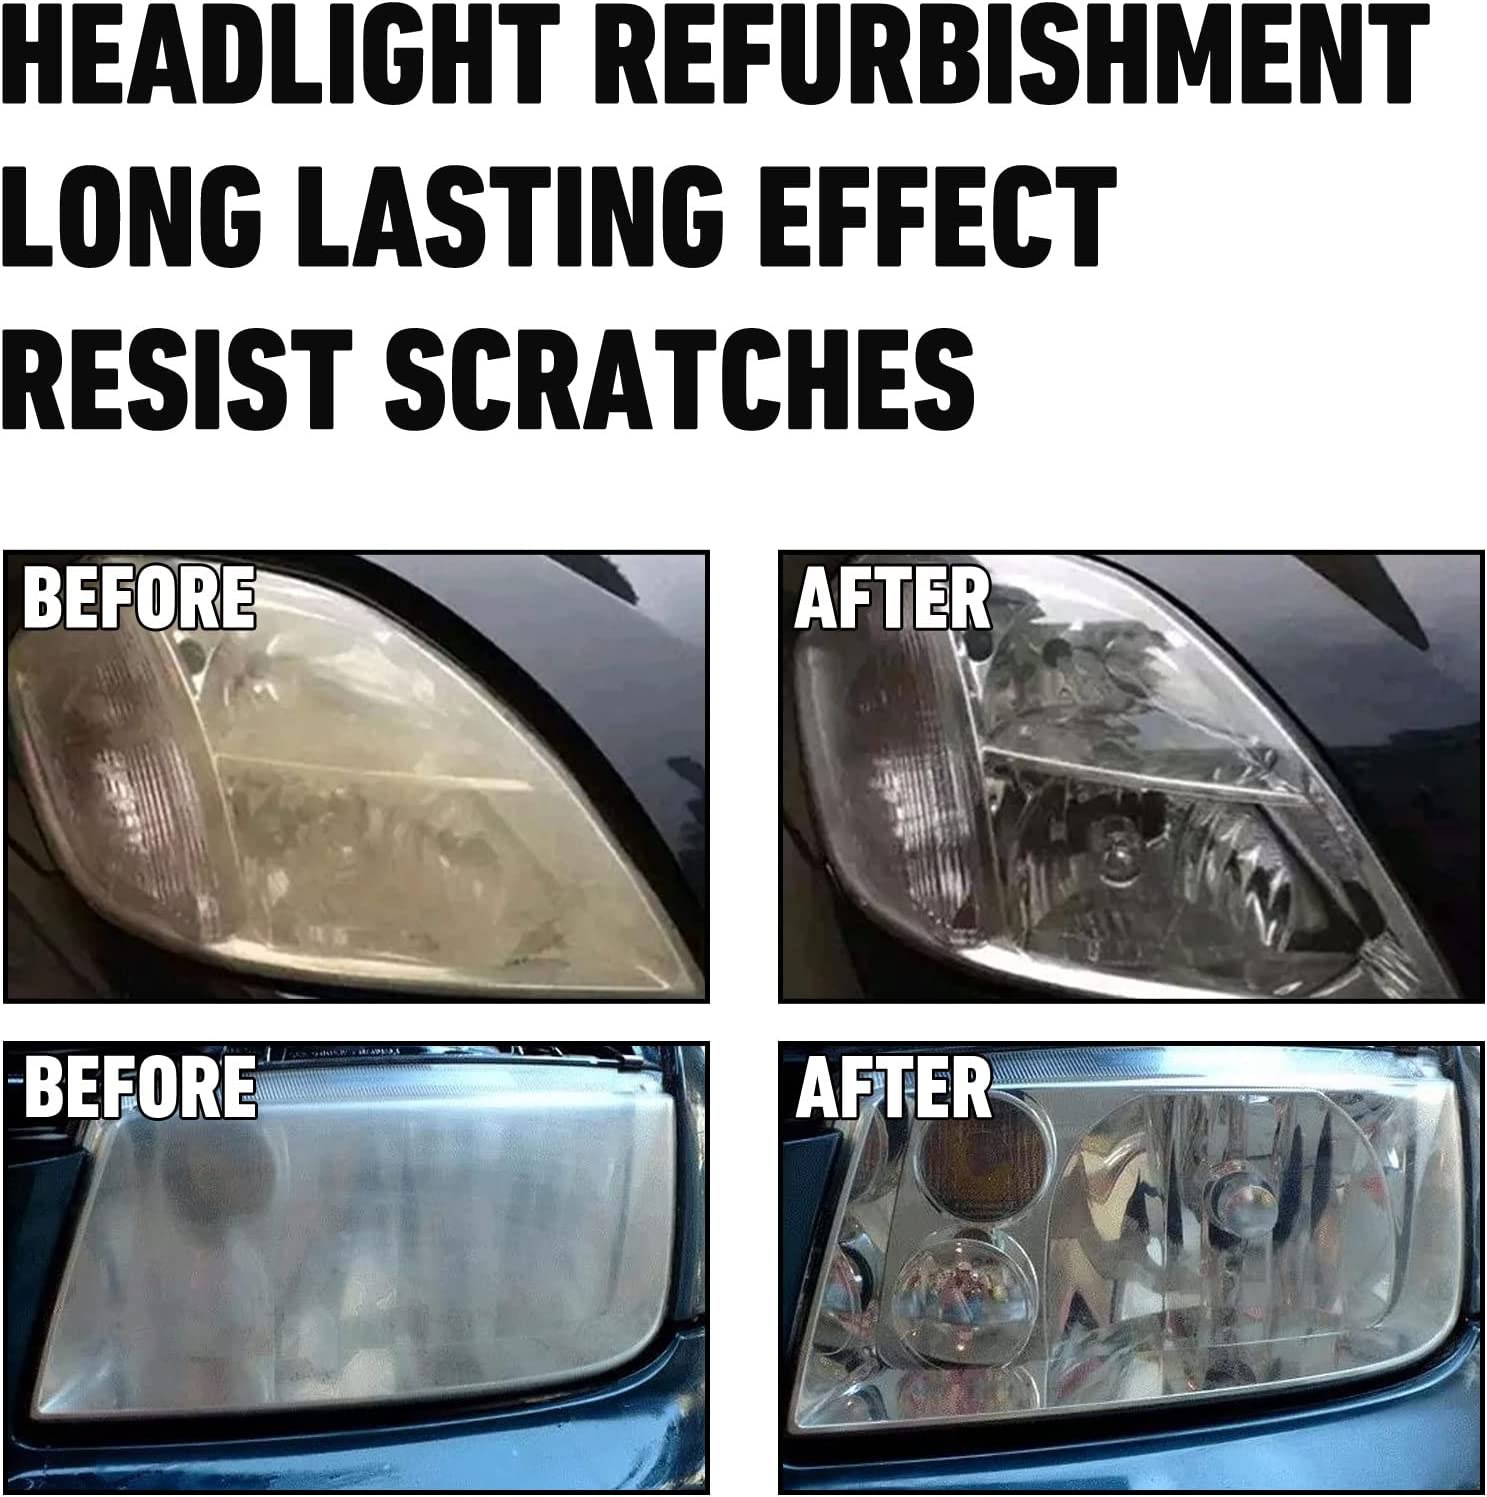 Durbuy Restowipes Headlight Restoration Kit,Restowipes Headlight Restore Cleaning Wipes,Polish Headlights Lens Restore Cleaner DIY Polishing,Headlight